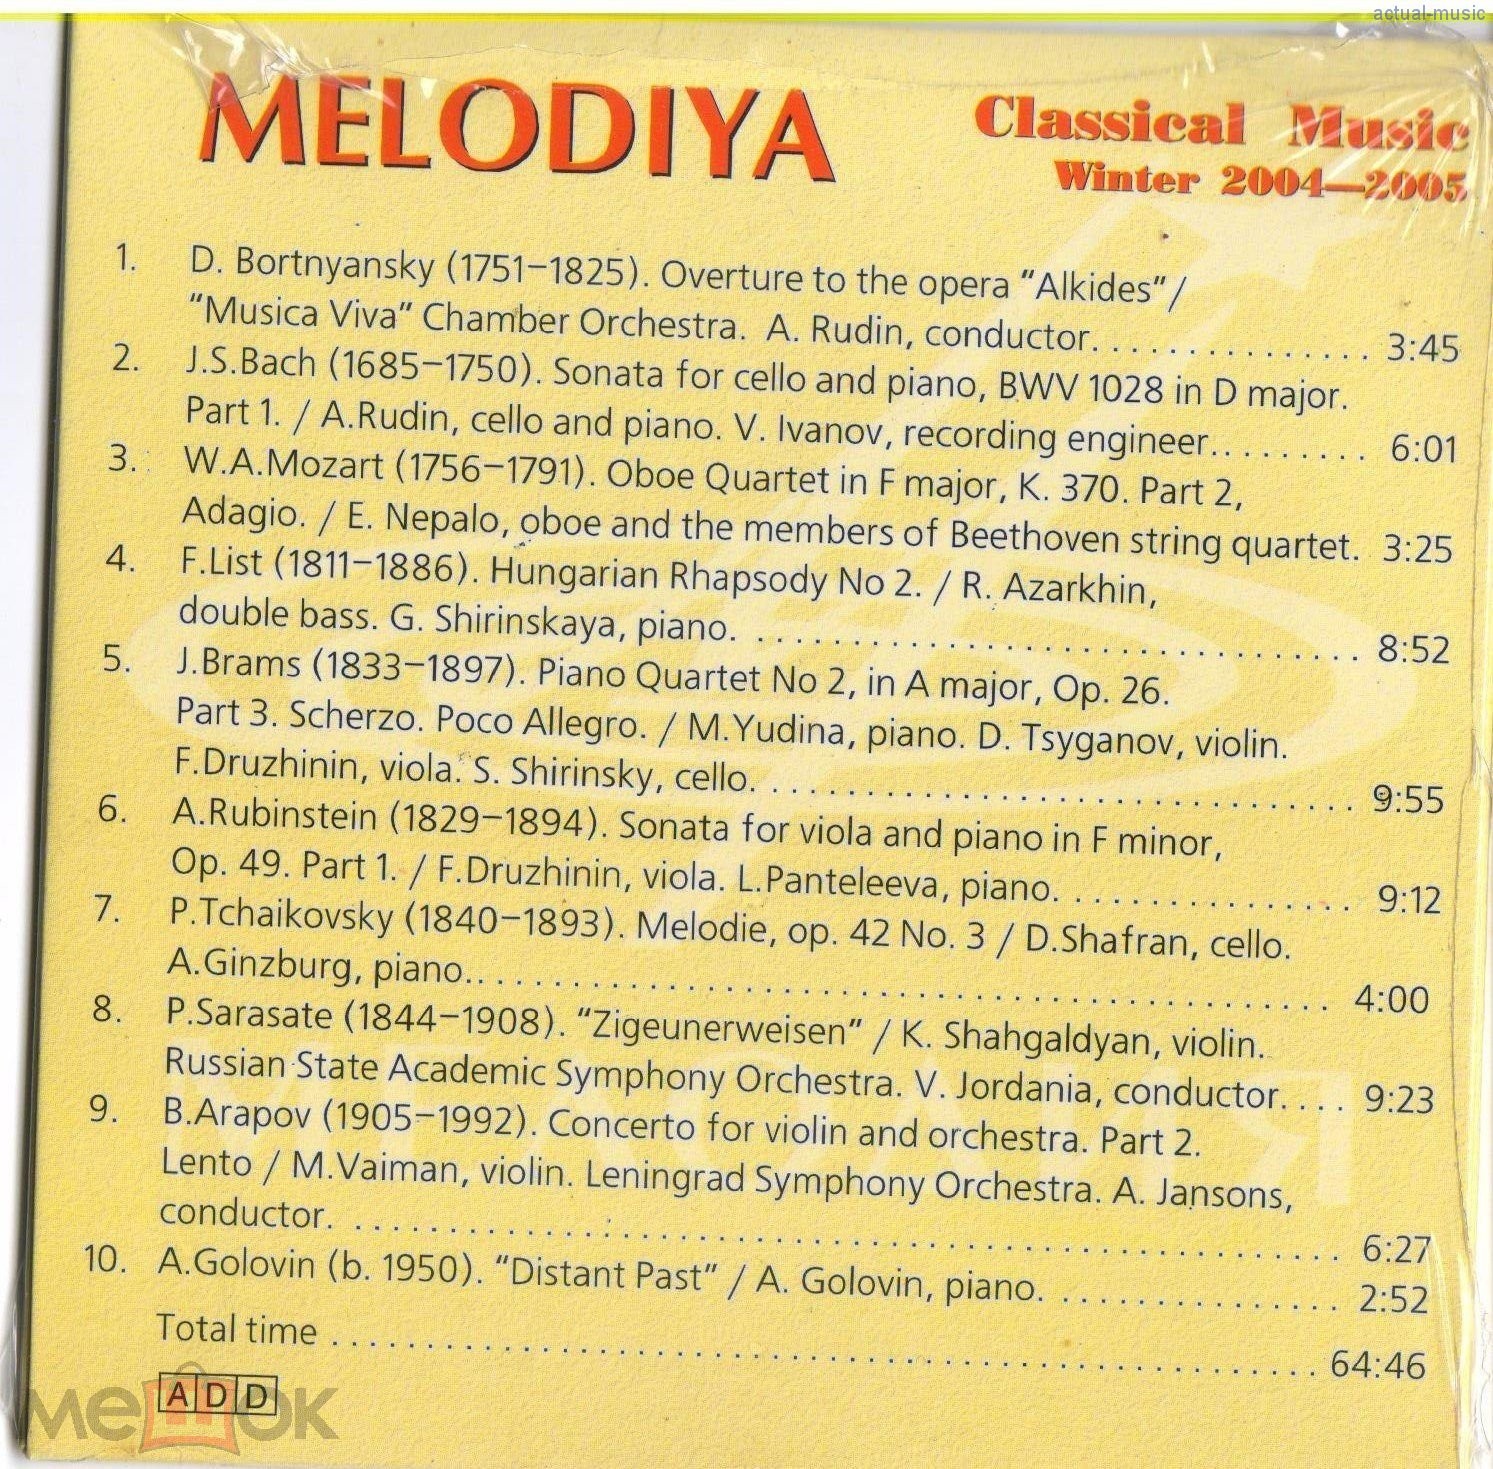 Melodiya. Classical Music. Winter 2004-2005